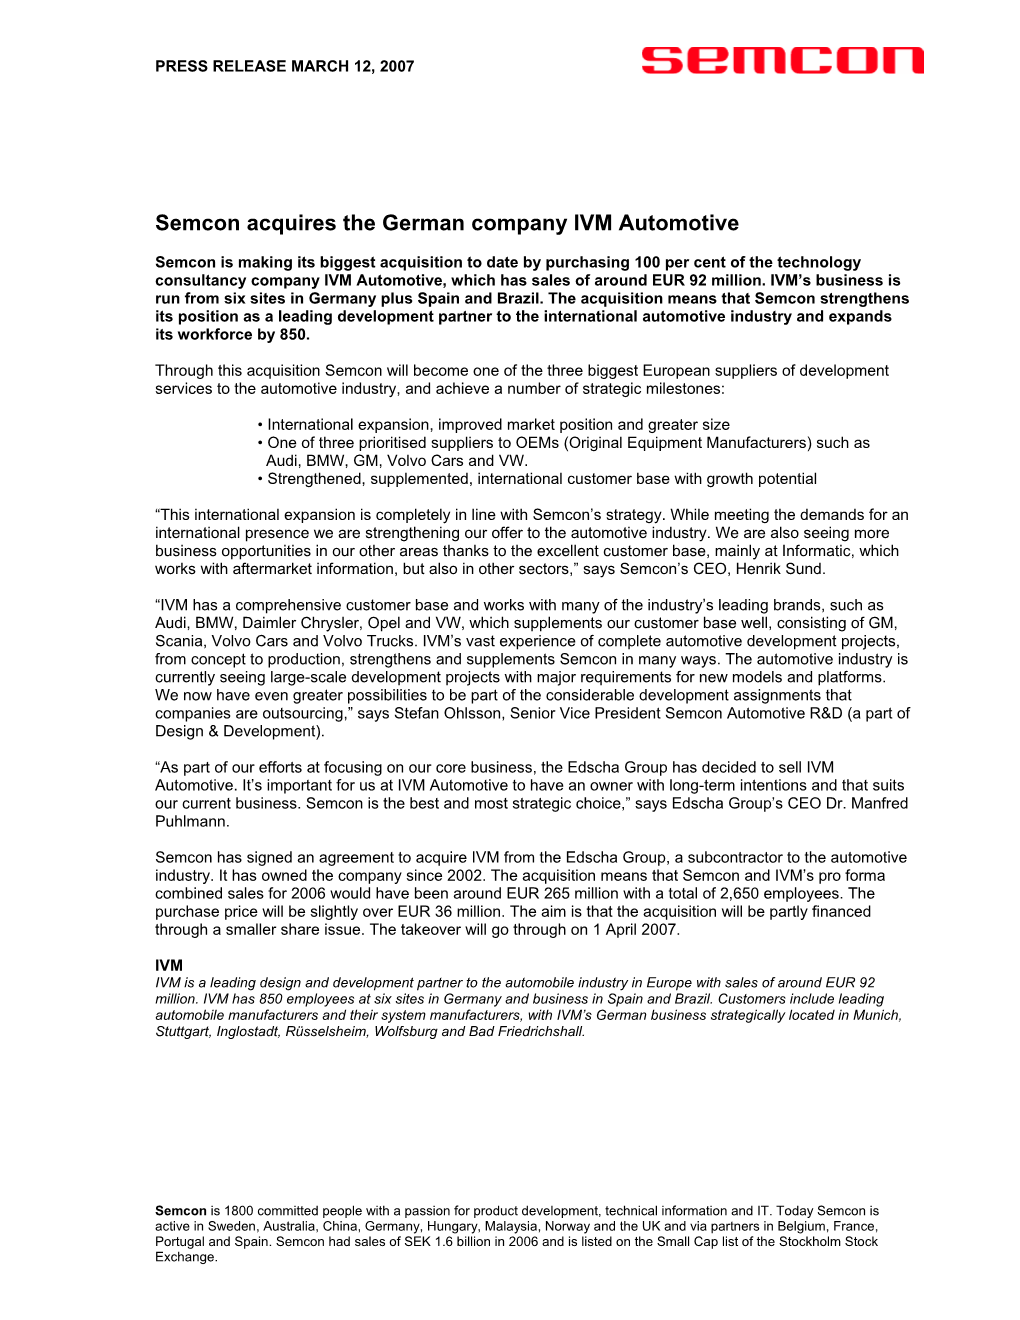 Semcon Acquires the German Company IVM Automotive